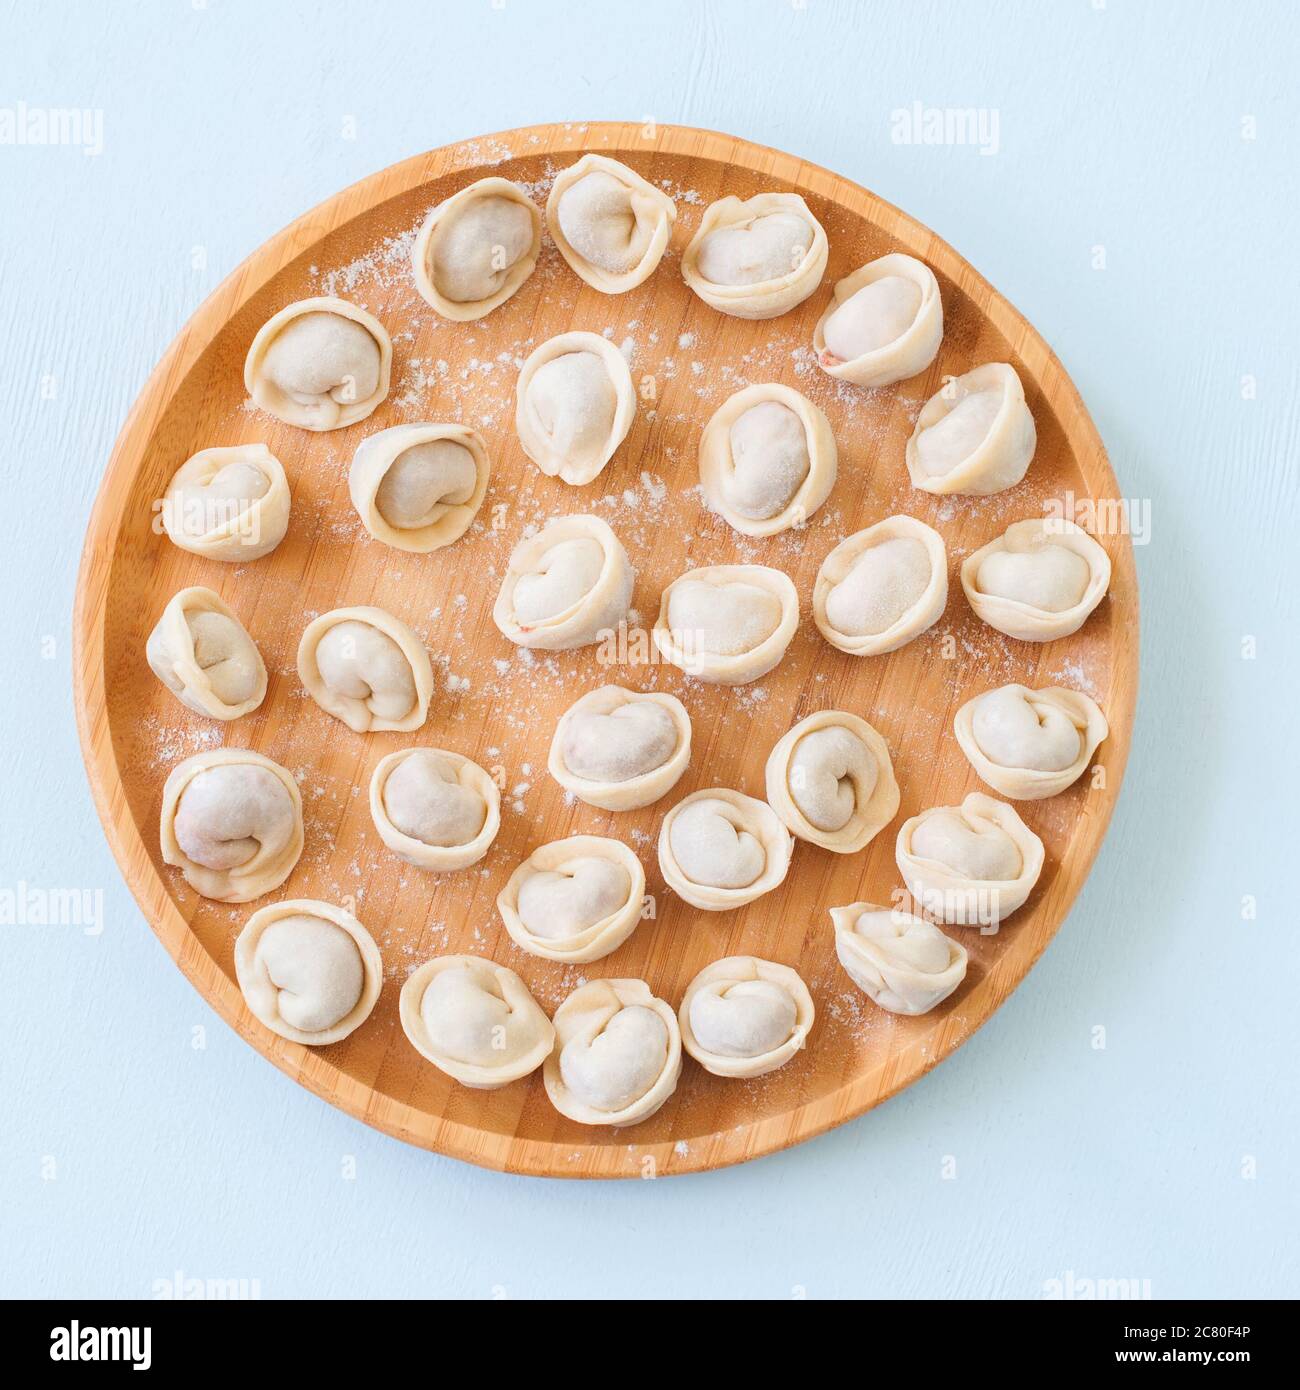 Raw pelmeni or russian dumplings on a wooden plate. Stock Photo